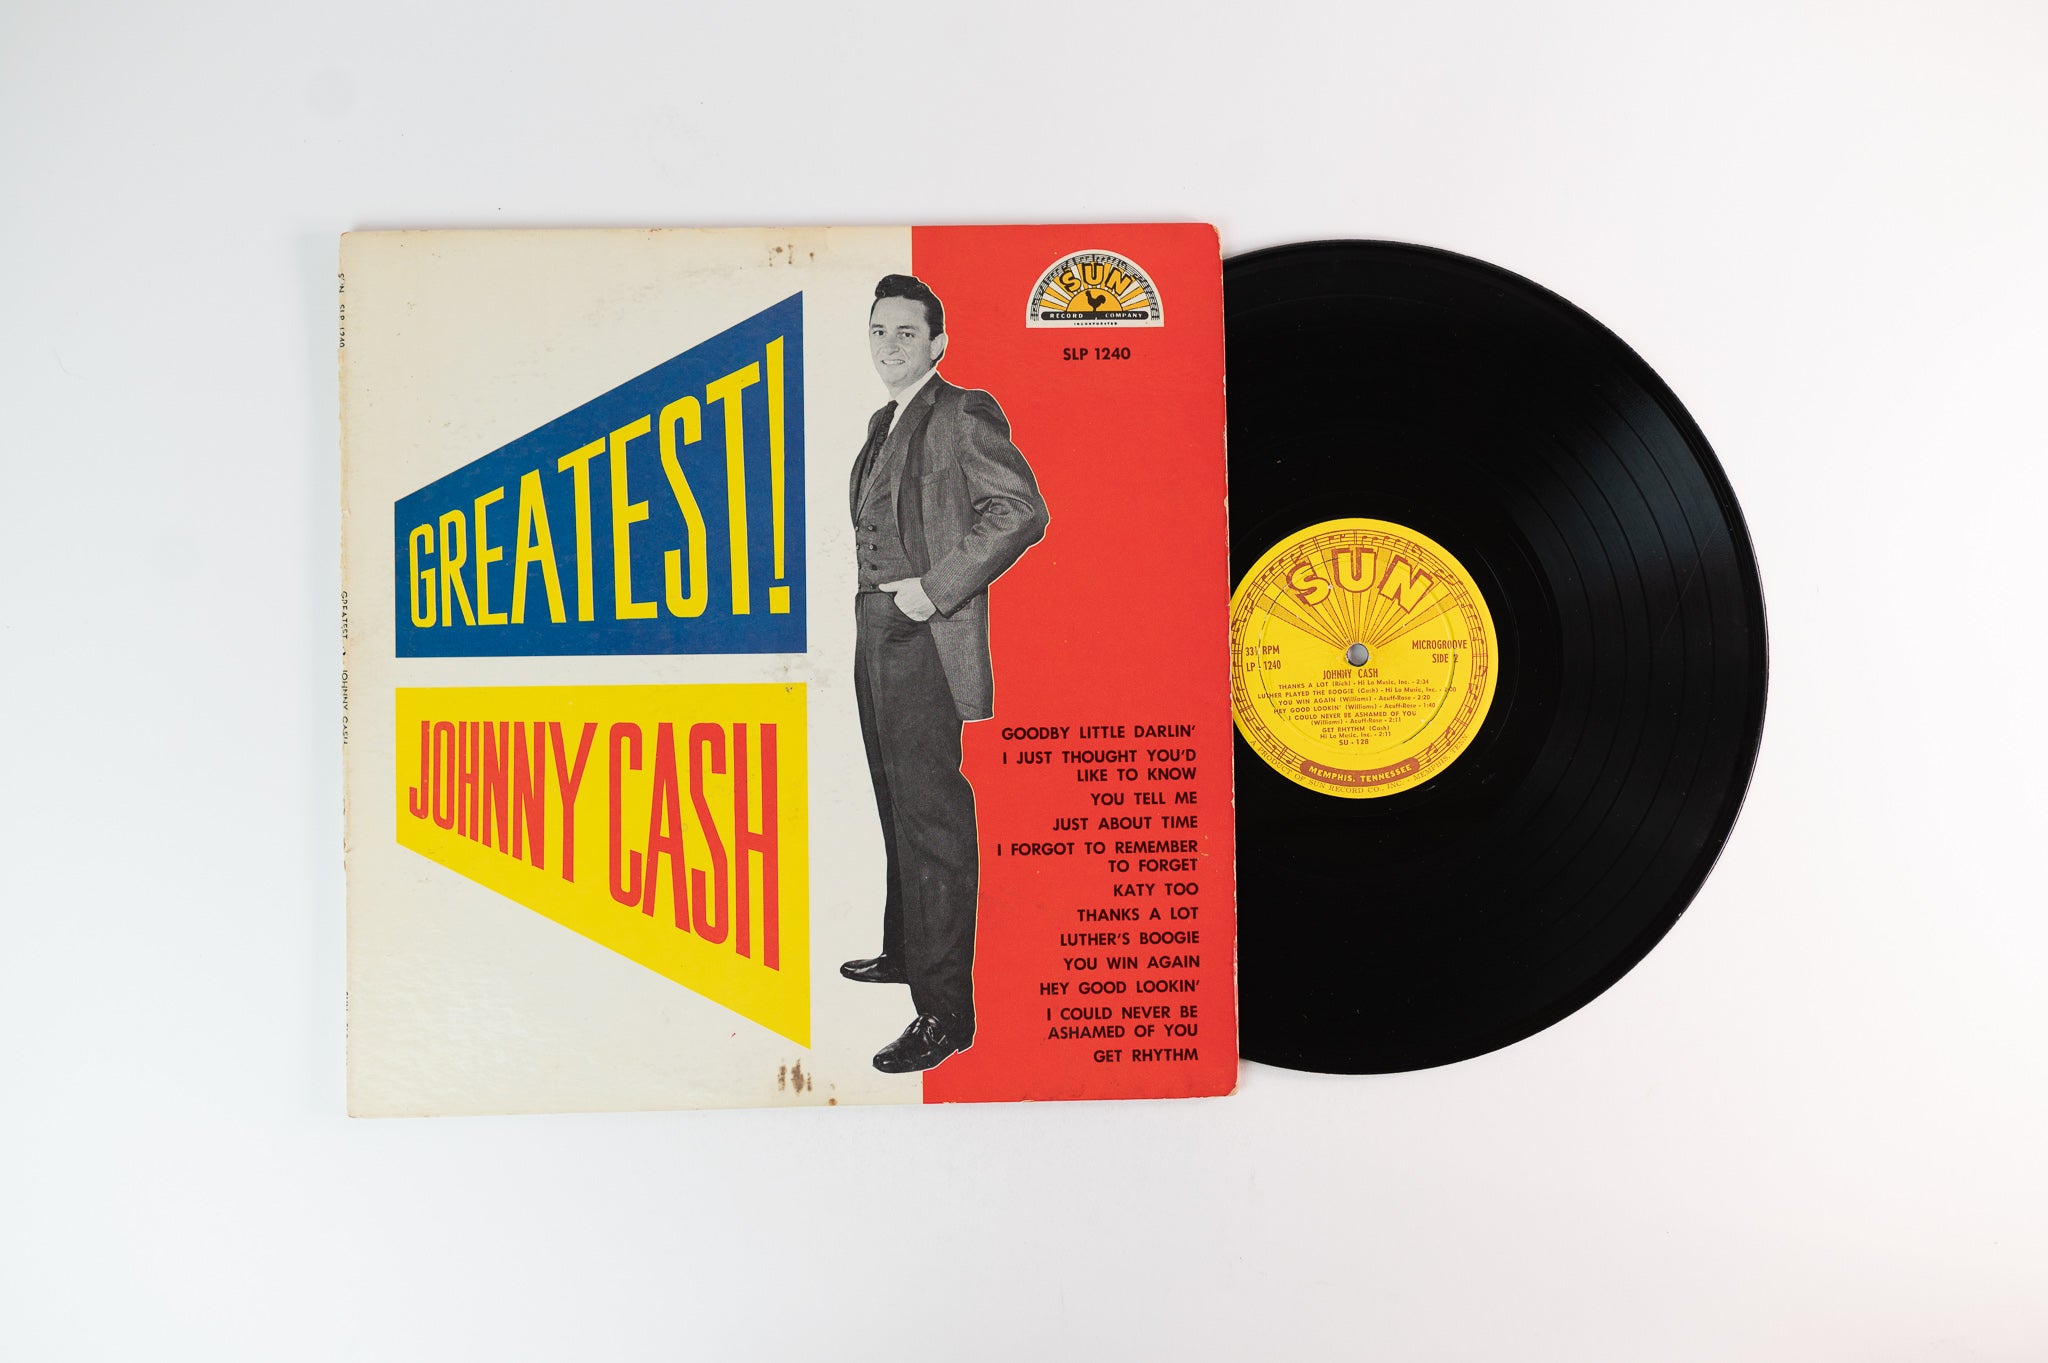 Johnny Cash - Greatest! on Sun SLP 1240